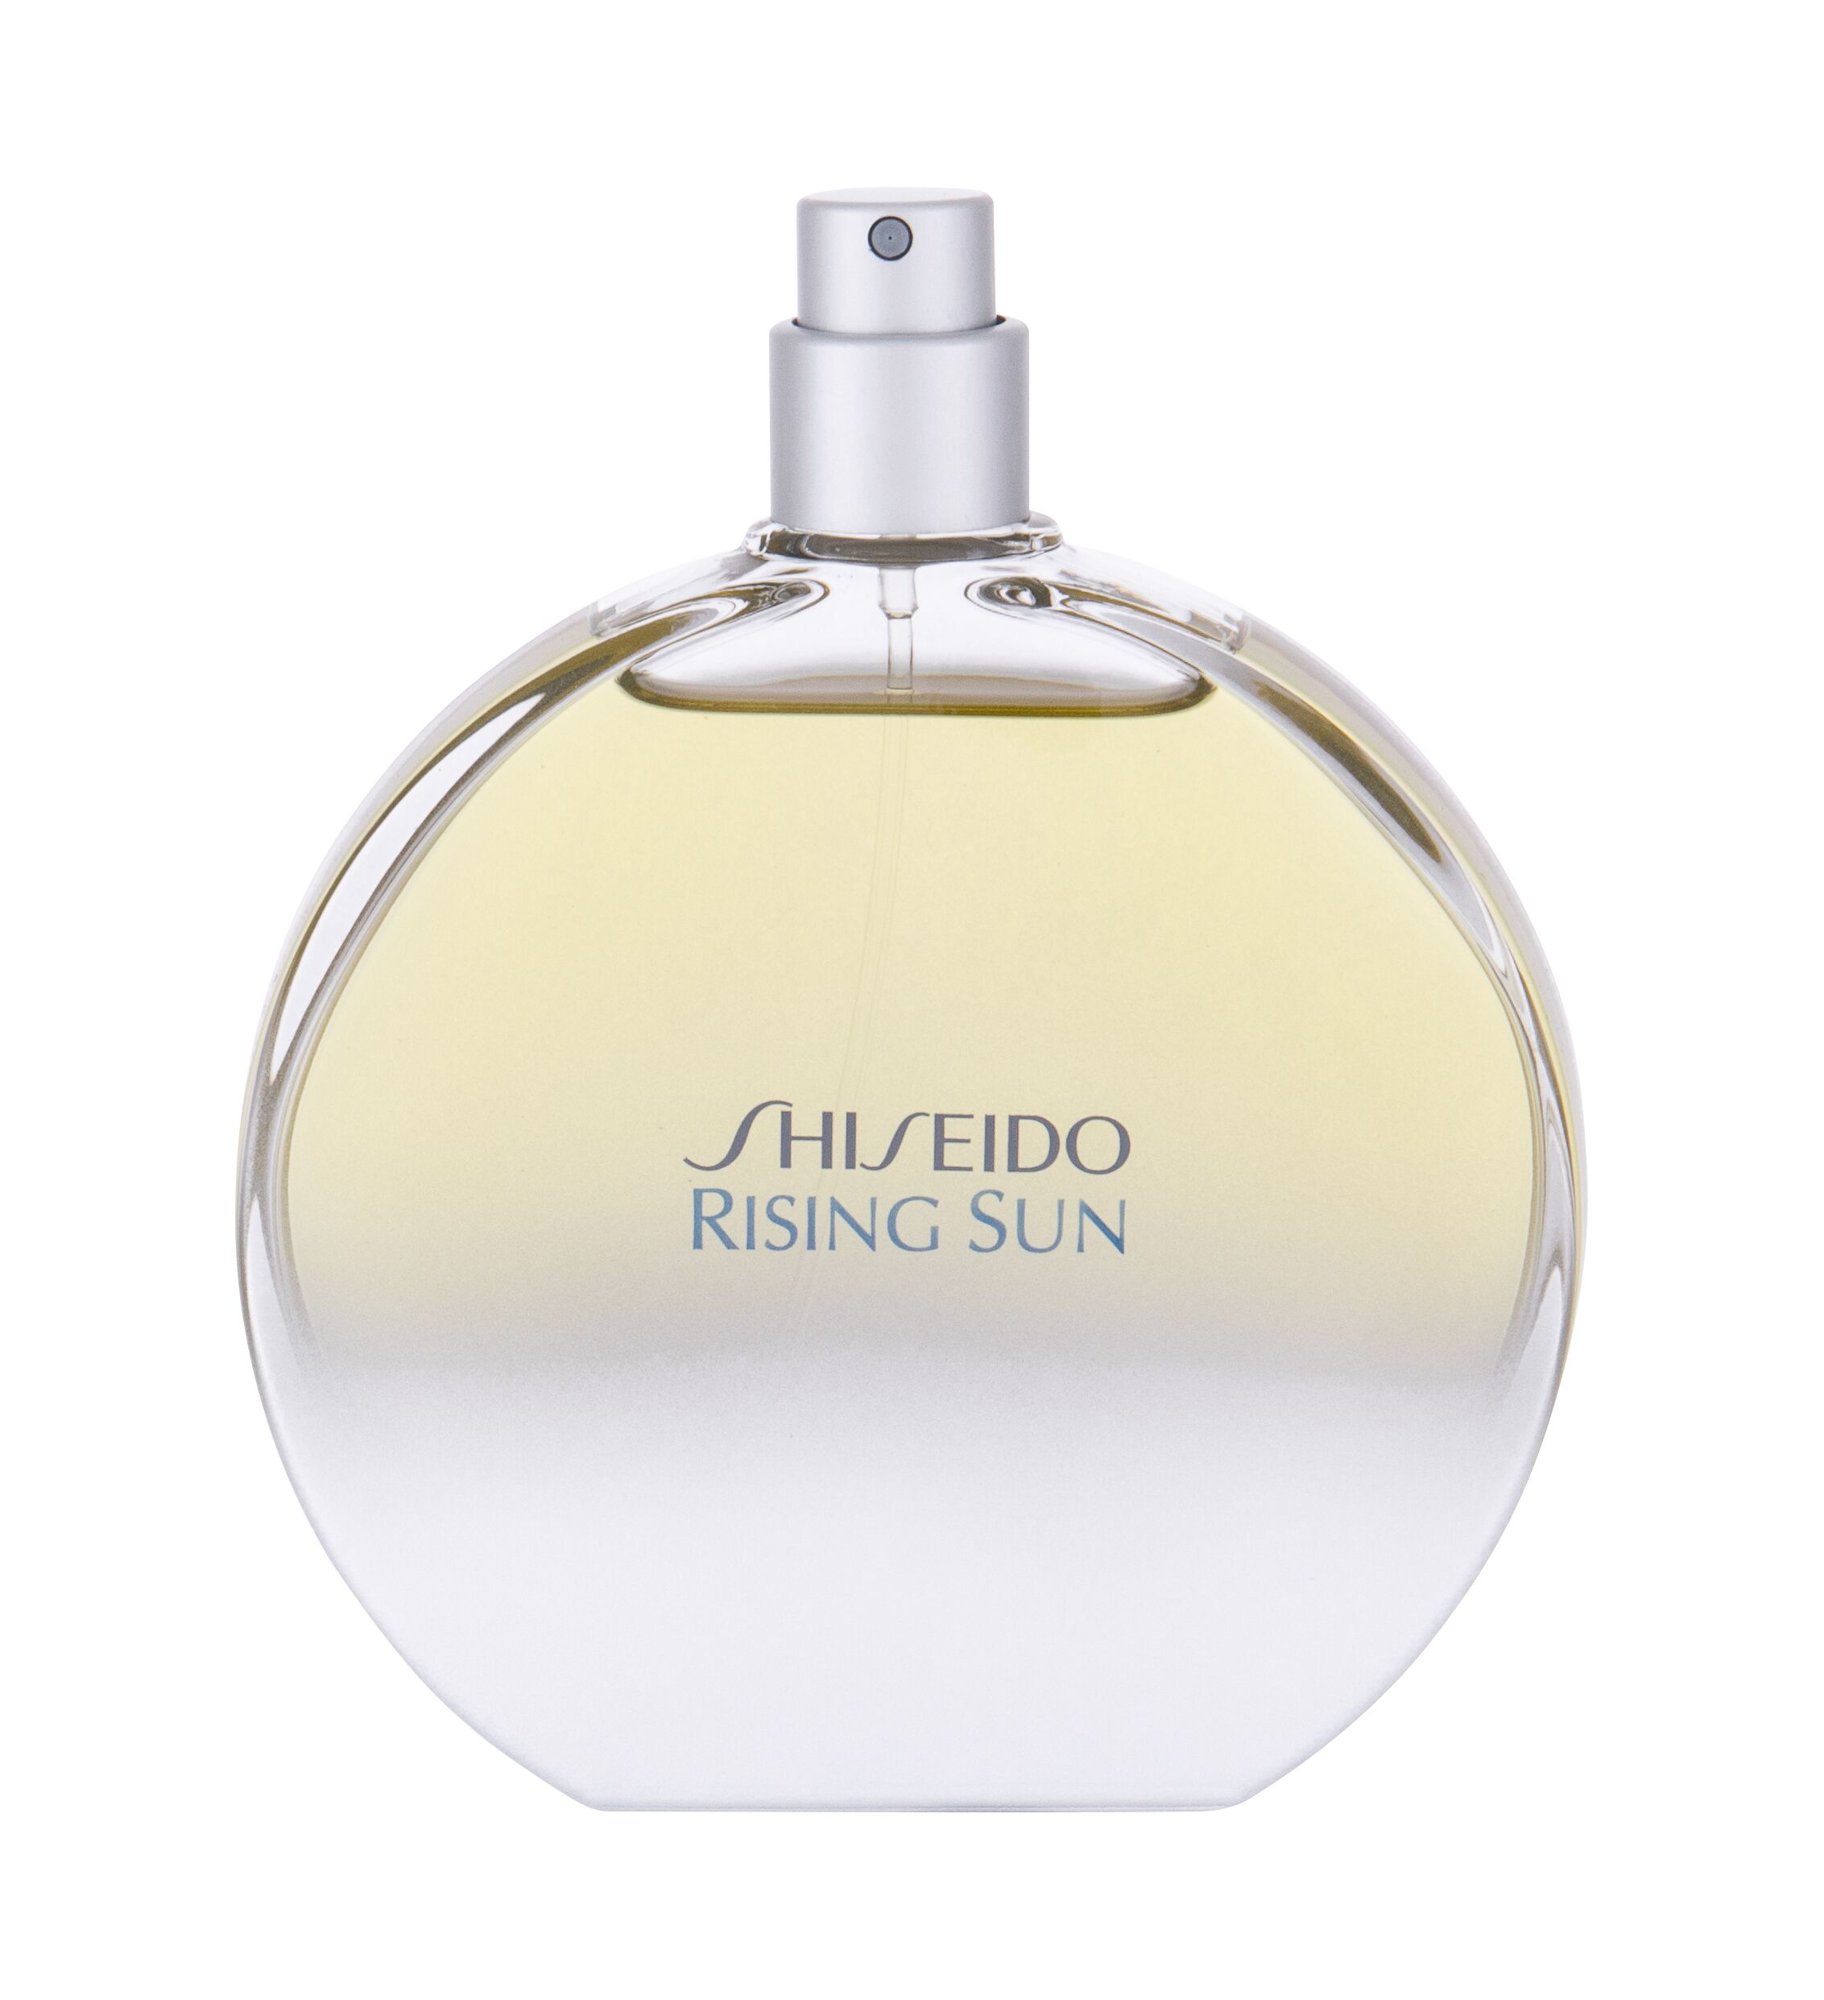 Shiseido Rising Sun, Toaletní voda 100ml, Tester